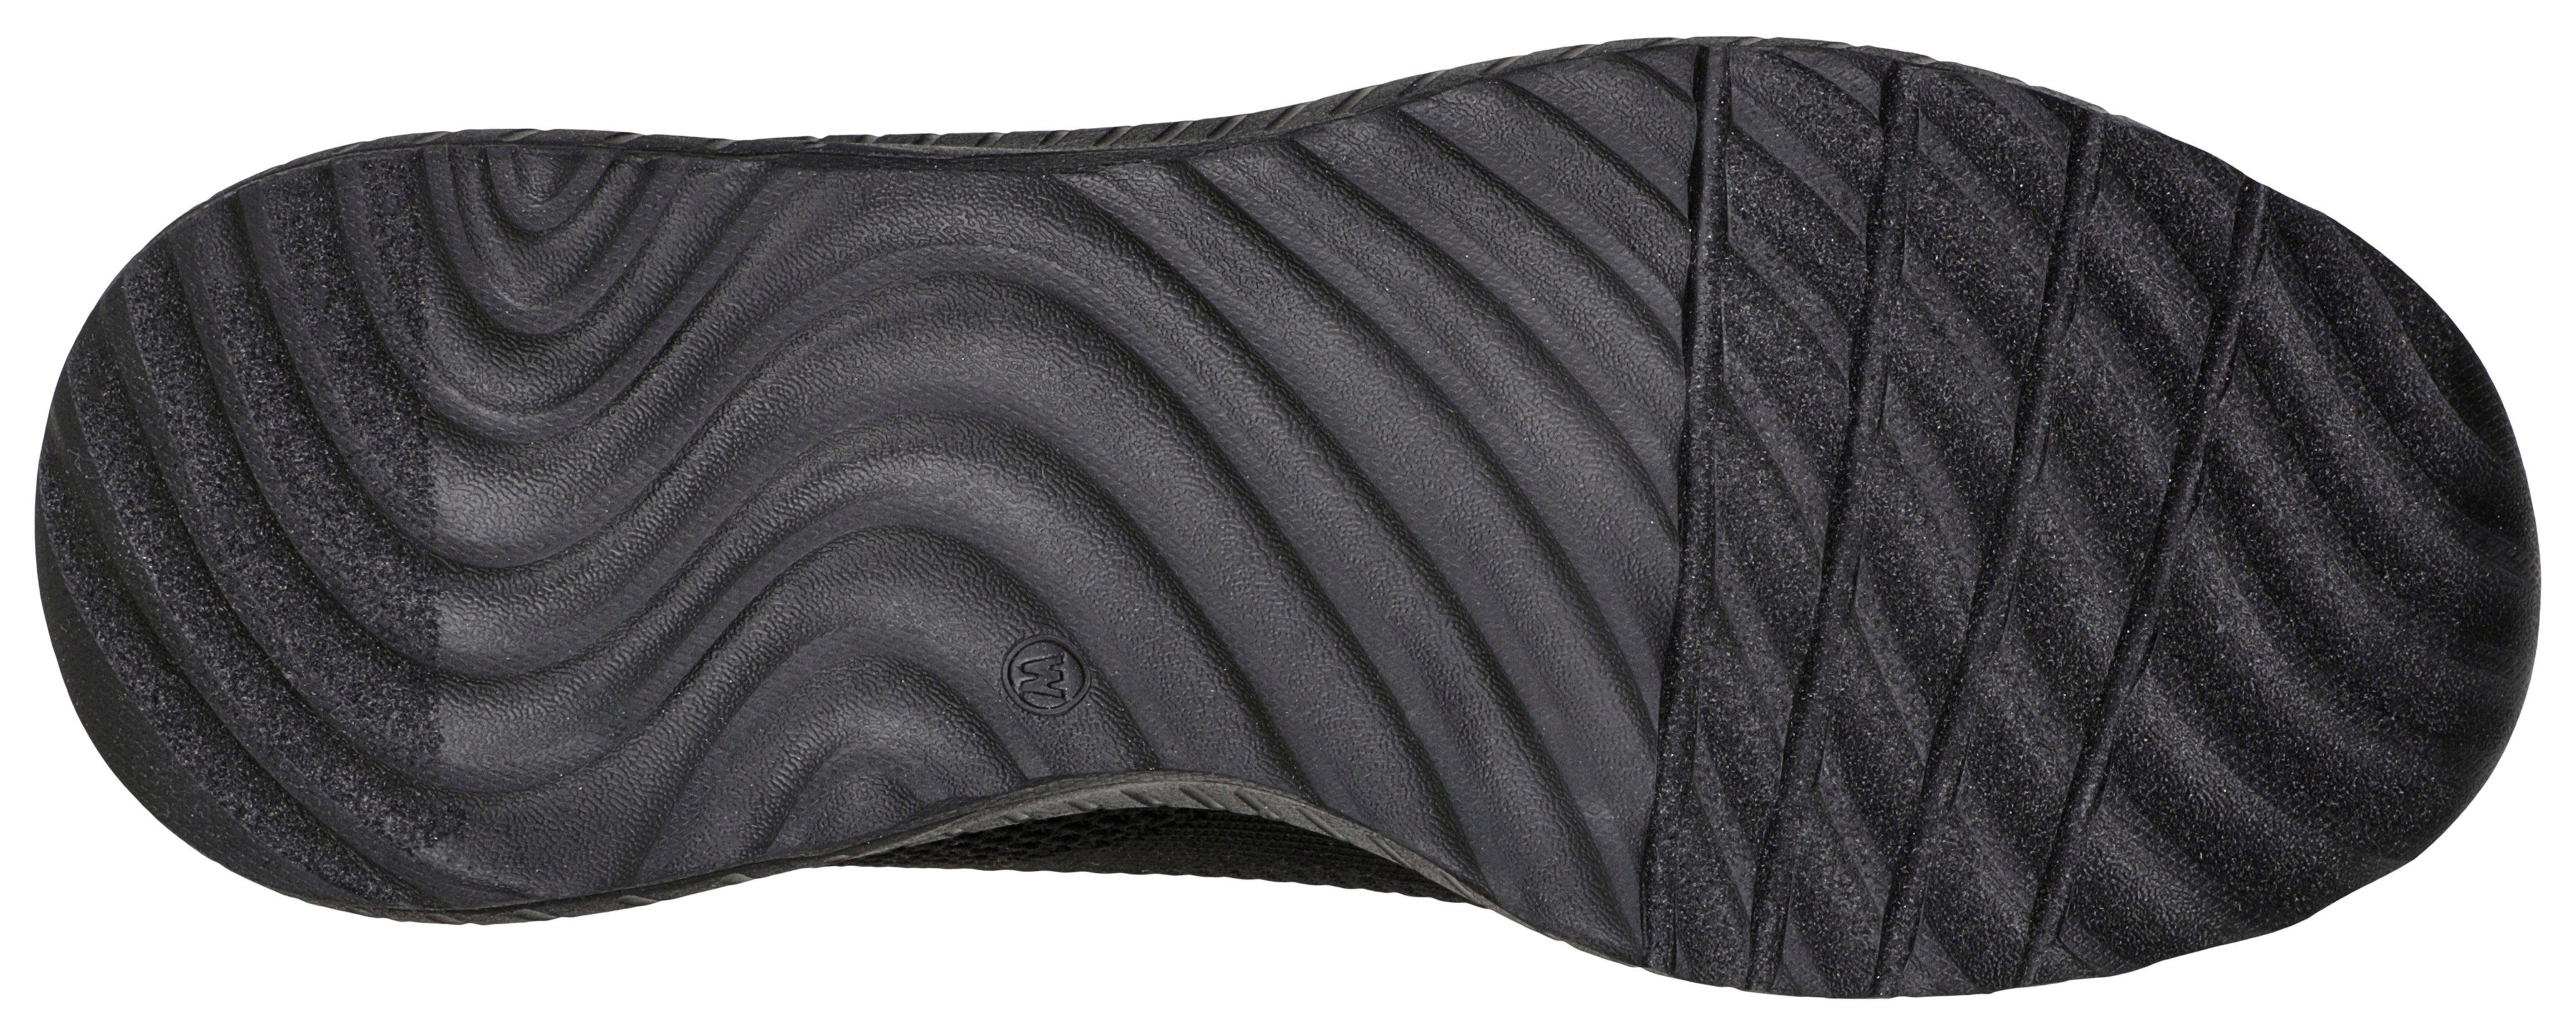 Skechers BOBS SQUAD CHAOS FACE komfortabler OFF Sneaker schwarz mit Innensohle